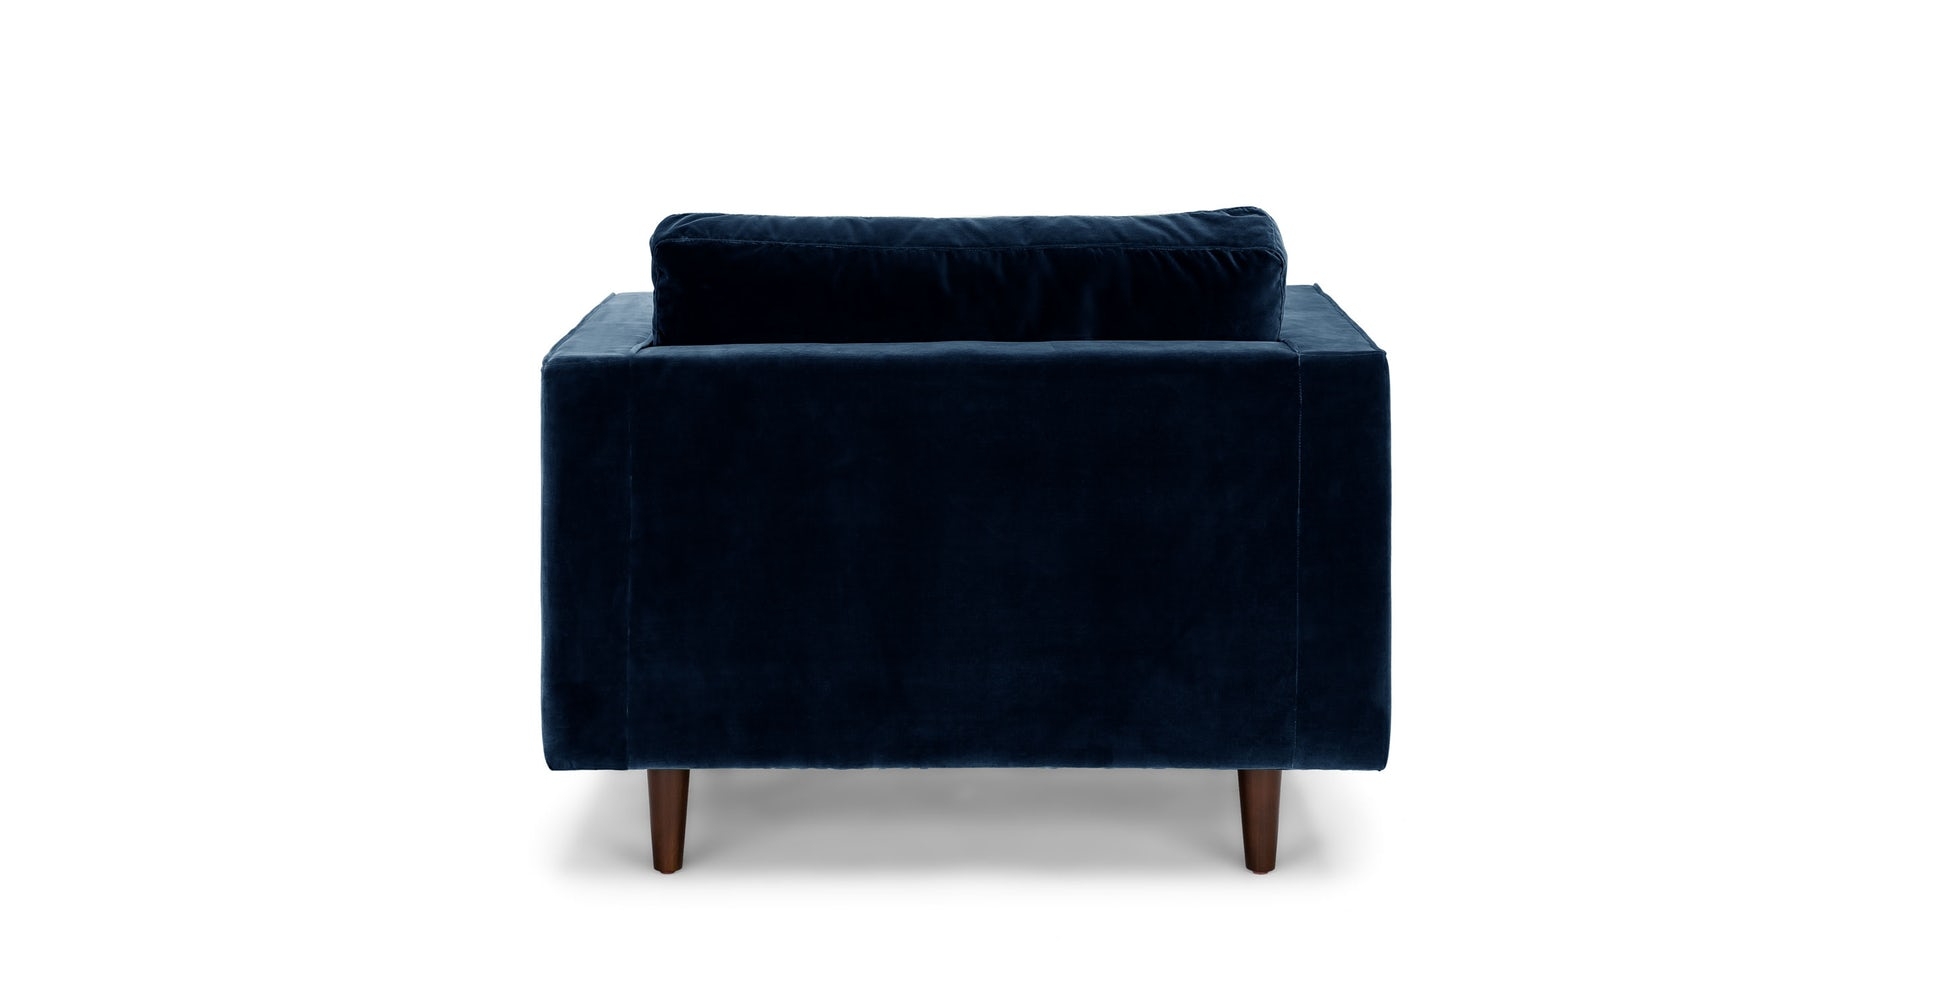 Sven Cascadia Blue Chair - Image 5